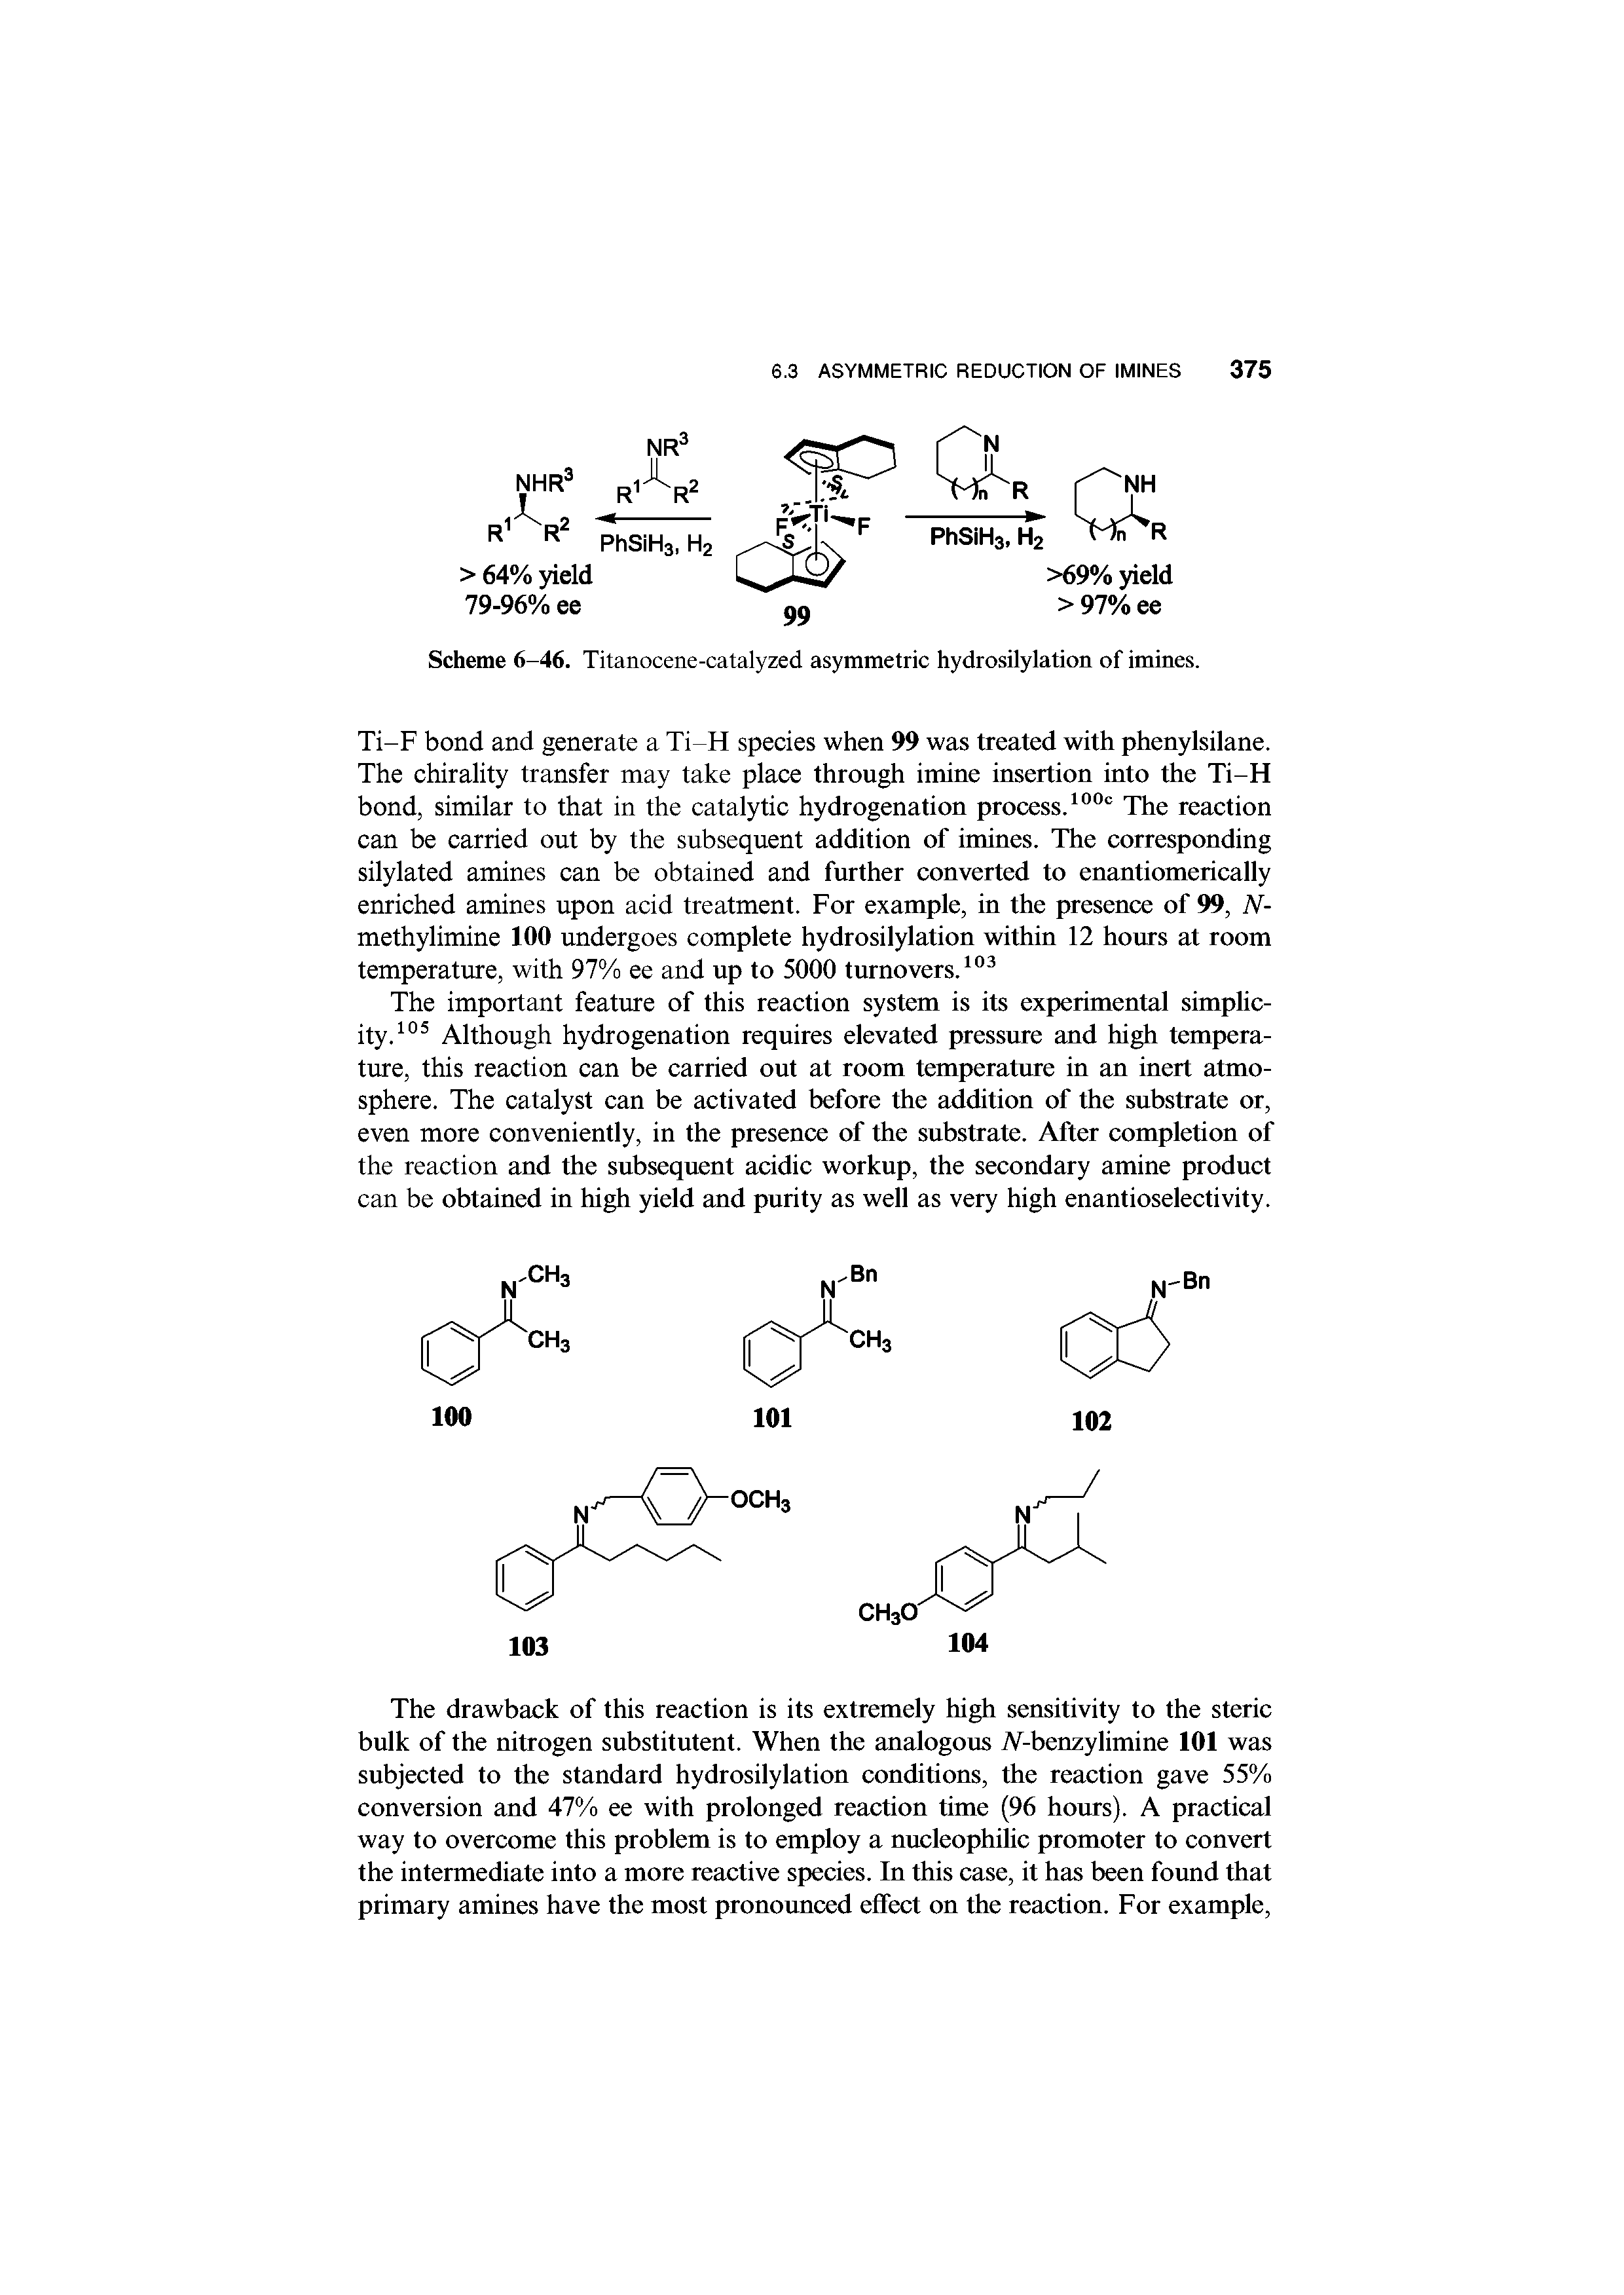 Scheme 6-46. Titanocene-catalyzed asymmetric hydrosilylation of imines.